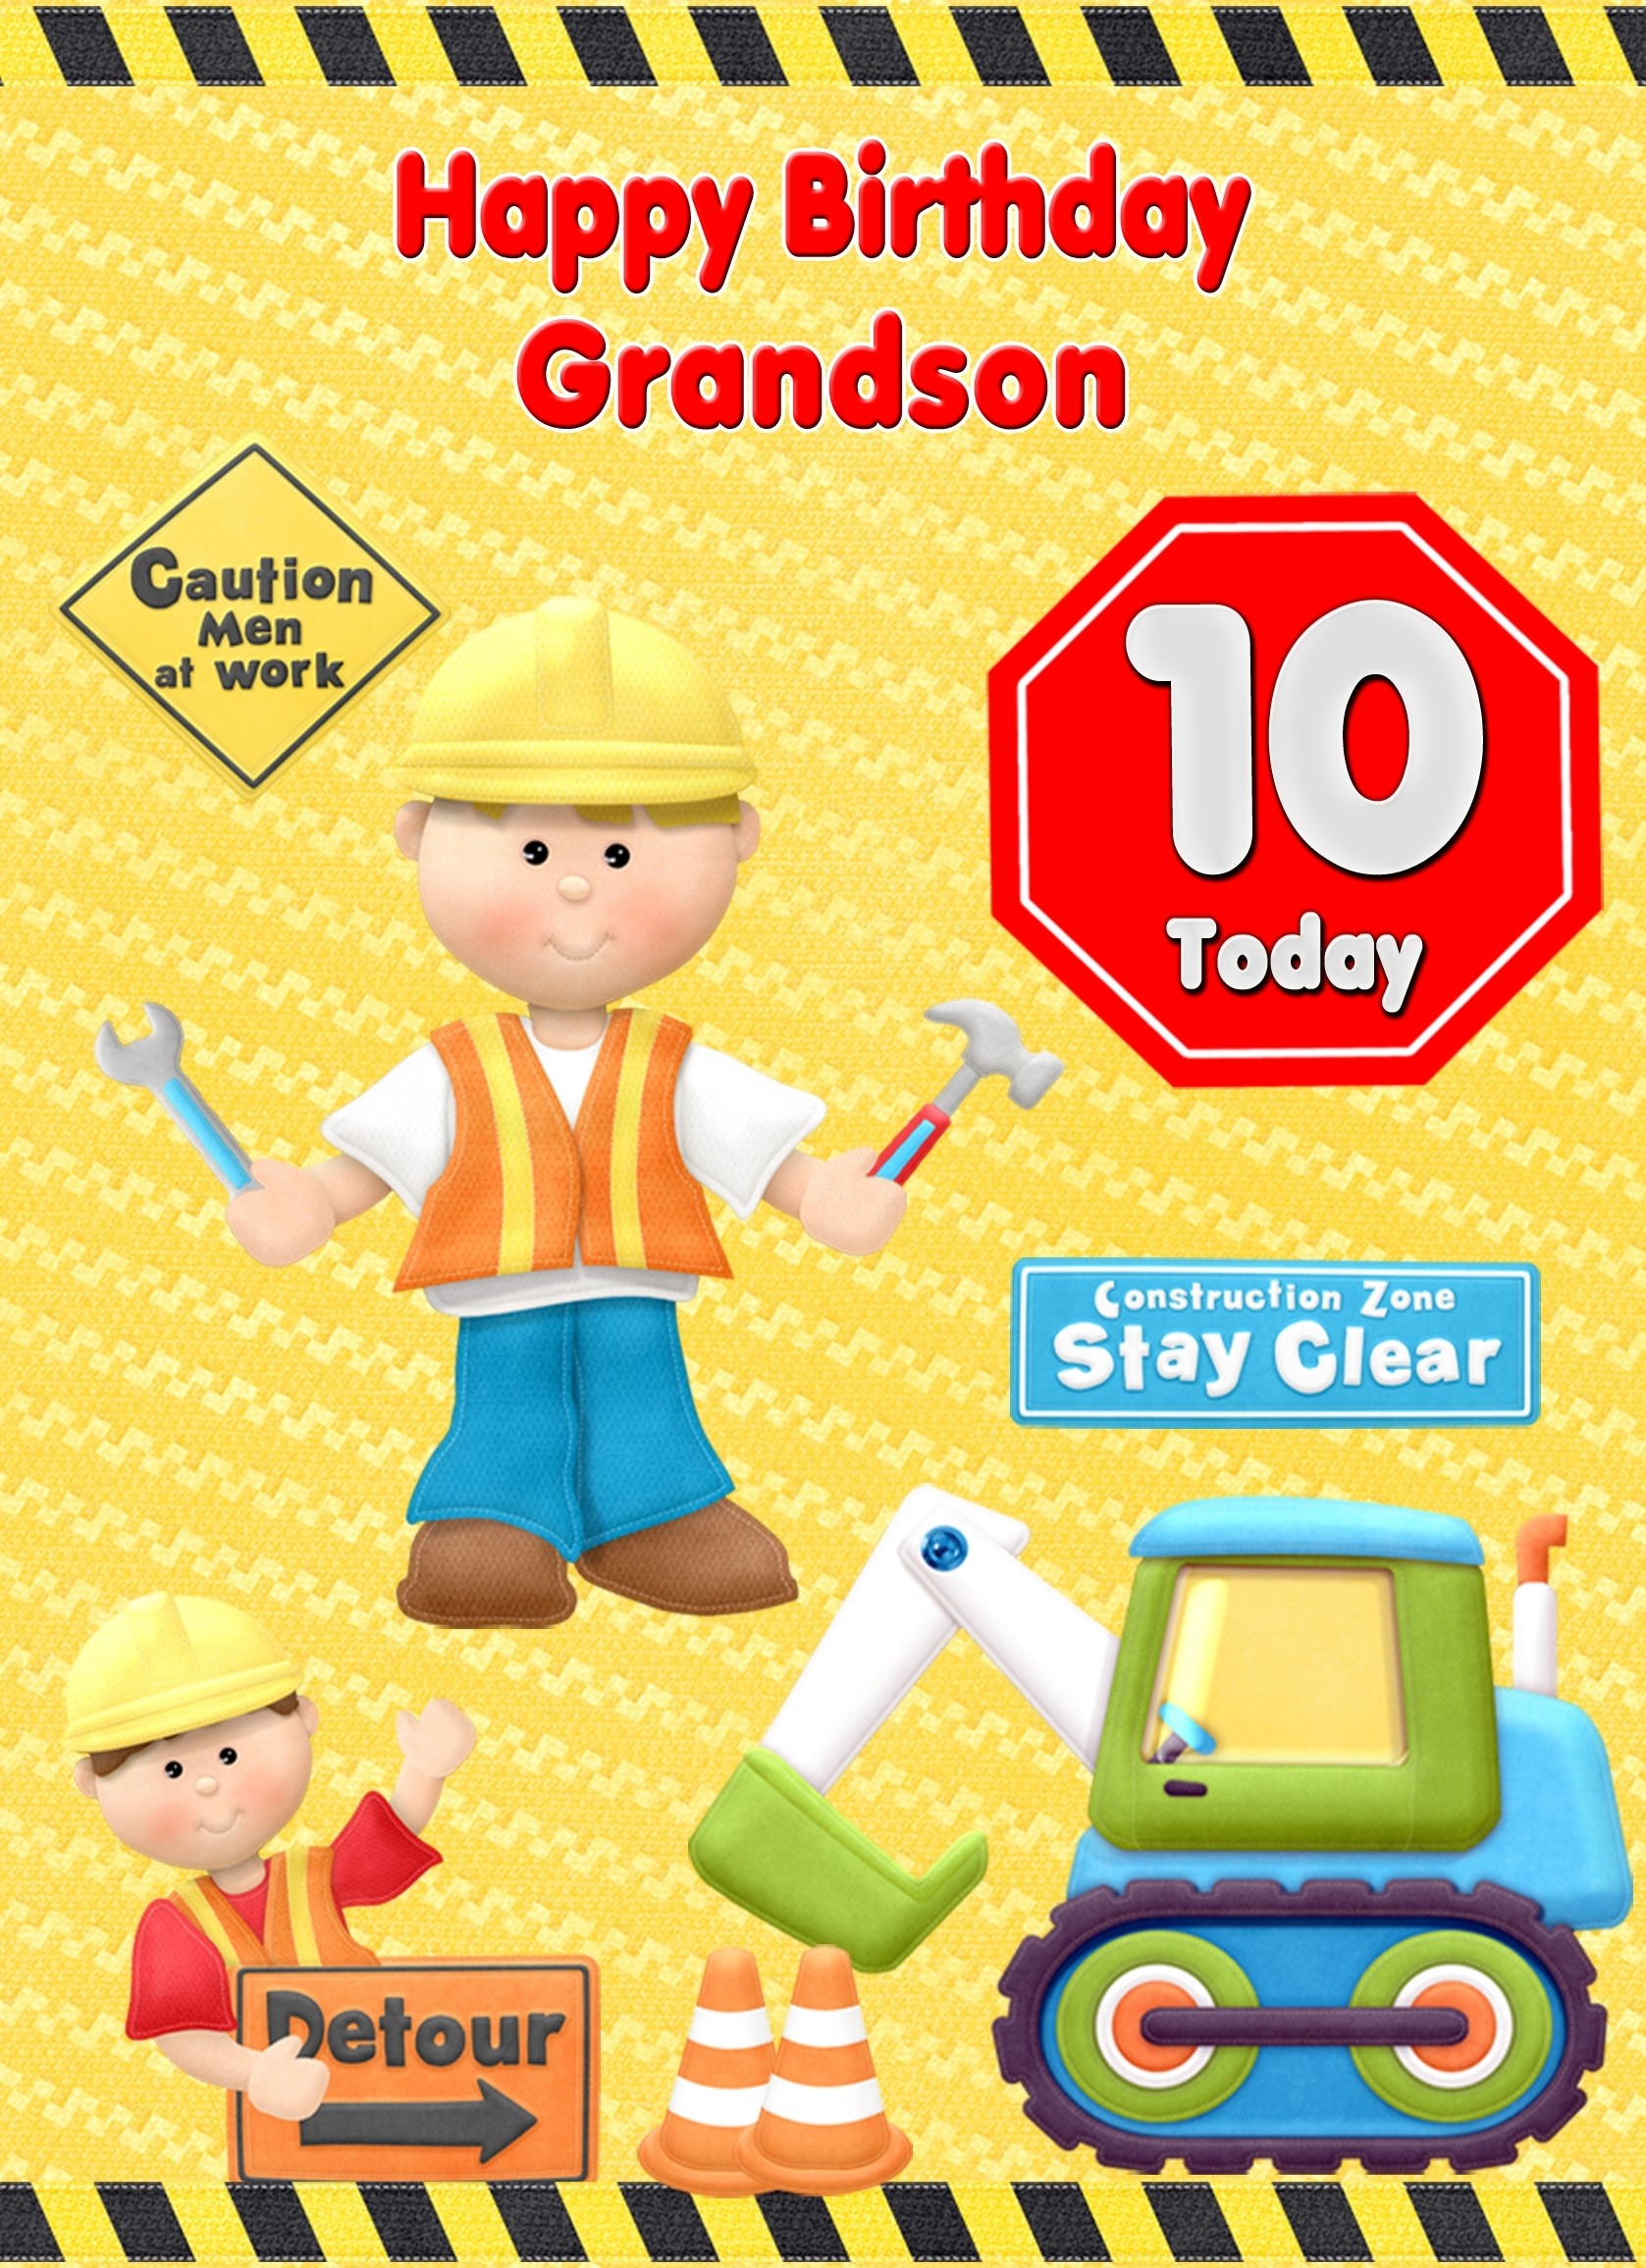 Kids 10th Birthday Builder Cartoon Card for Grandson